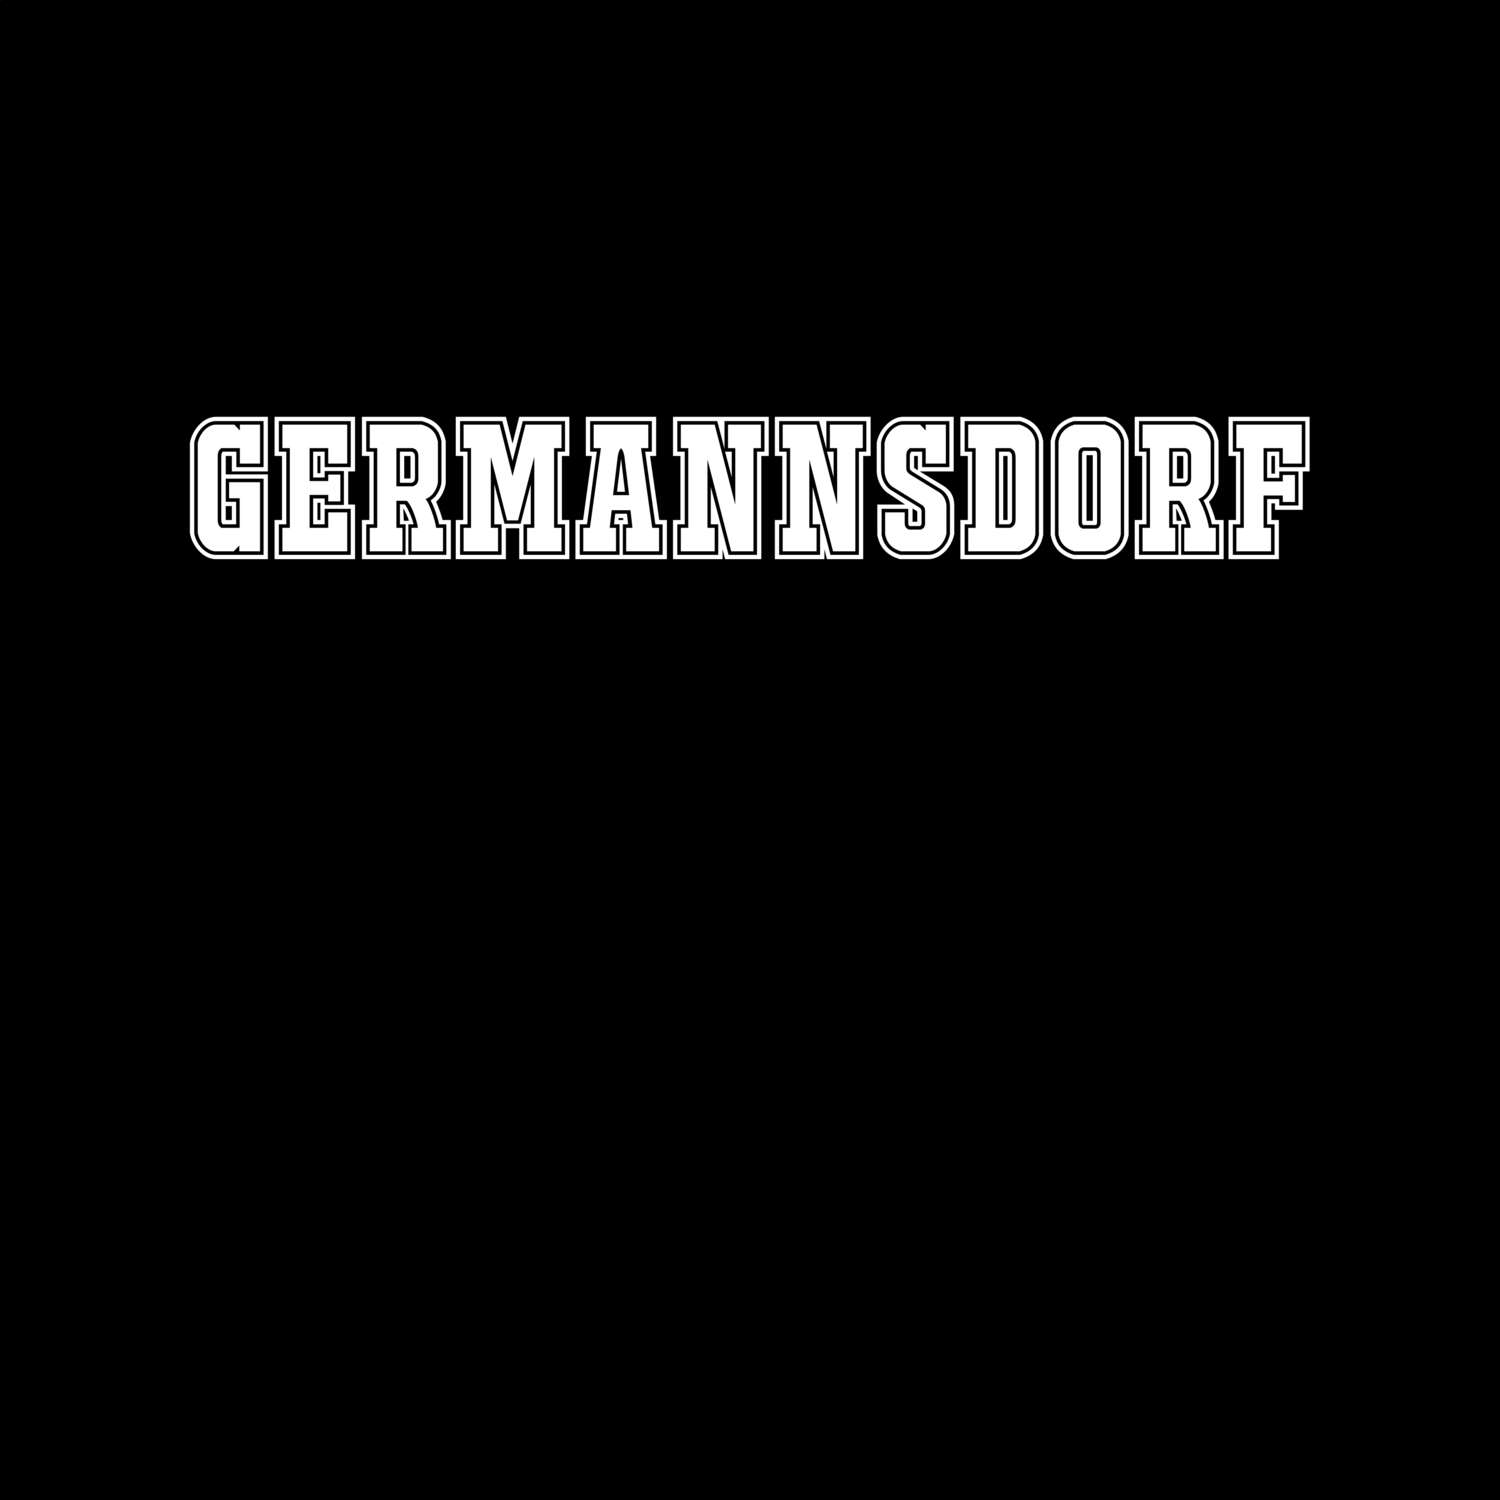 Germannsdorf T-Shirt »Classic«